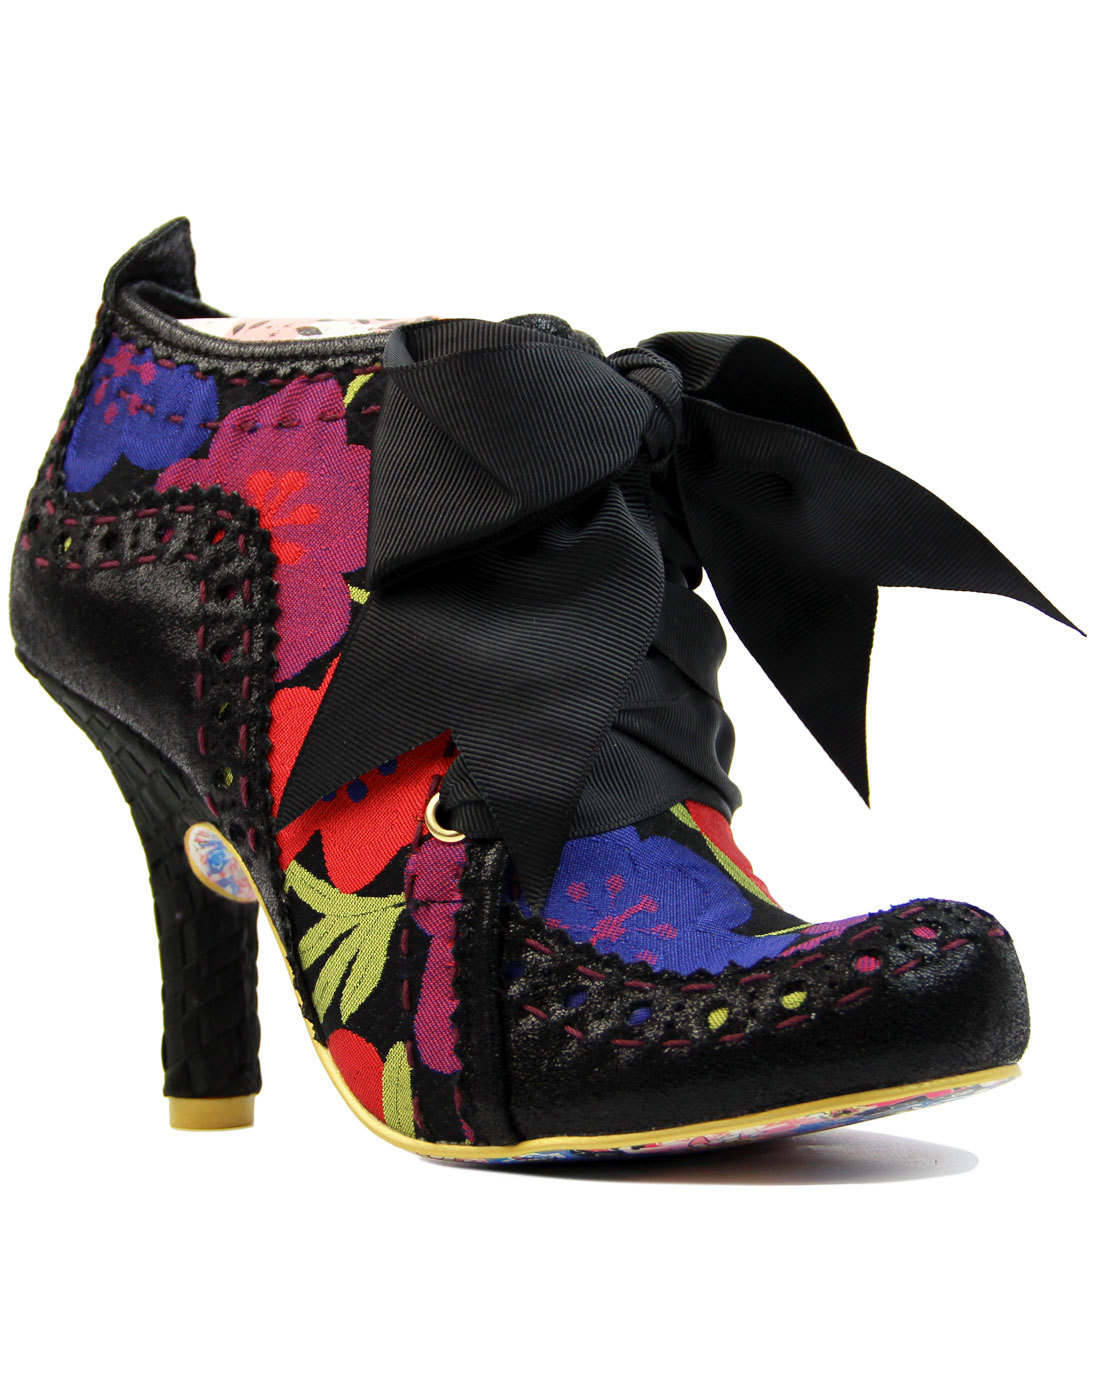 Abigail's Third Party IRREGULAR CHOICE Heel Boots